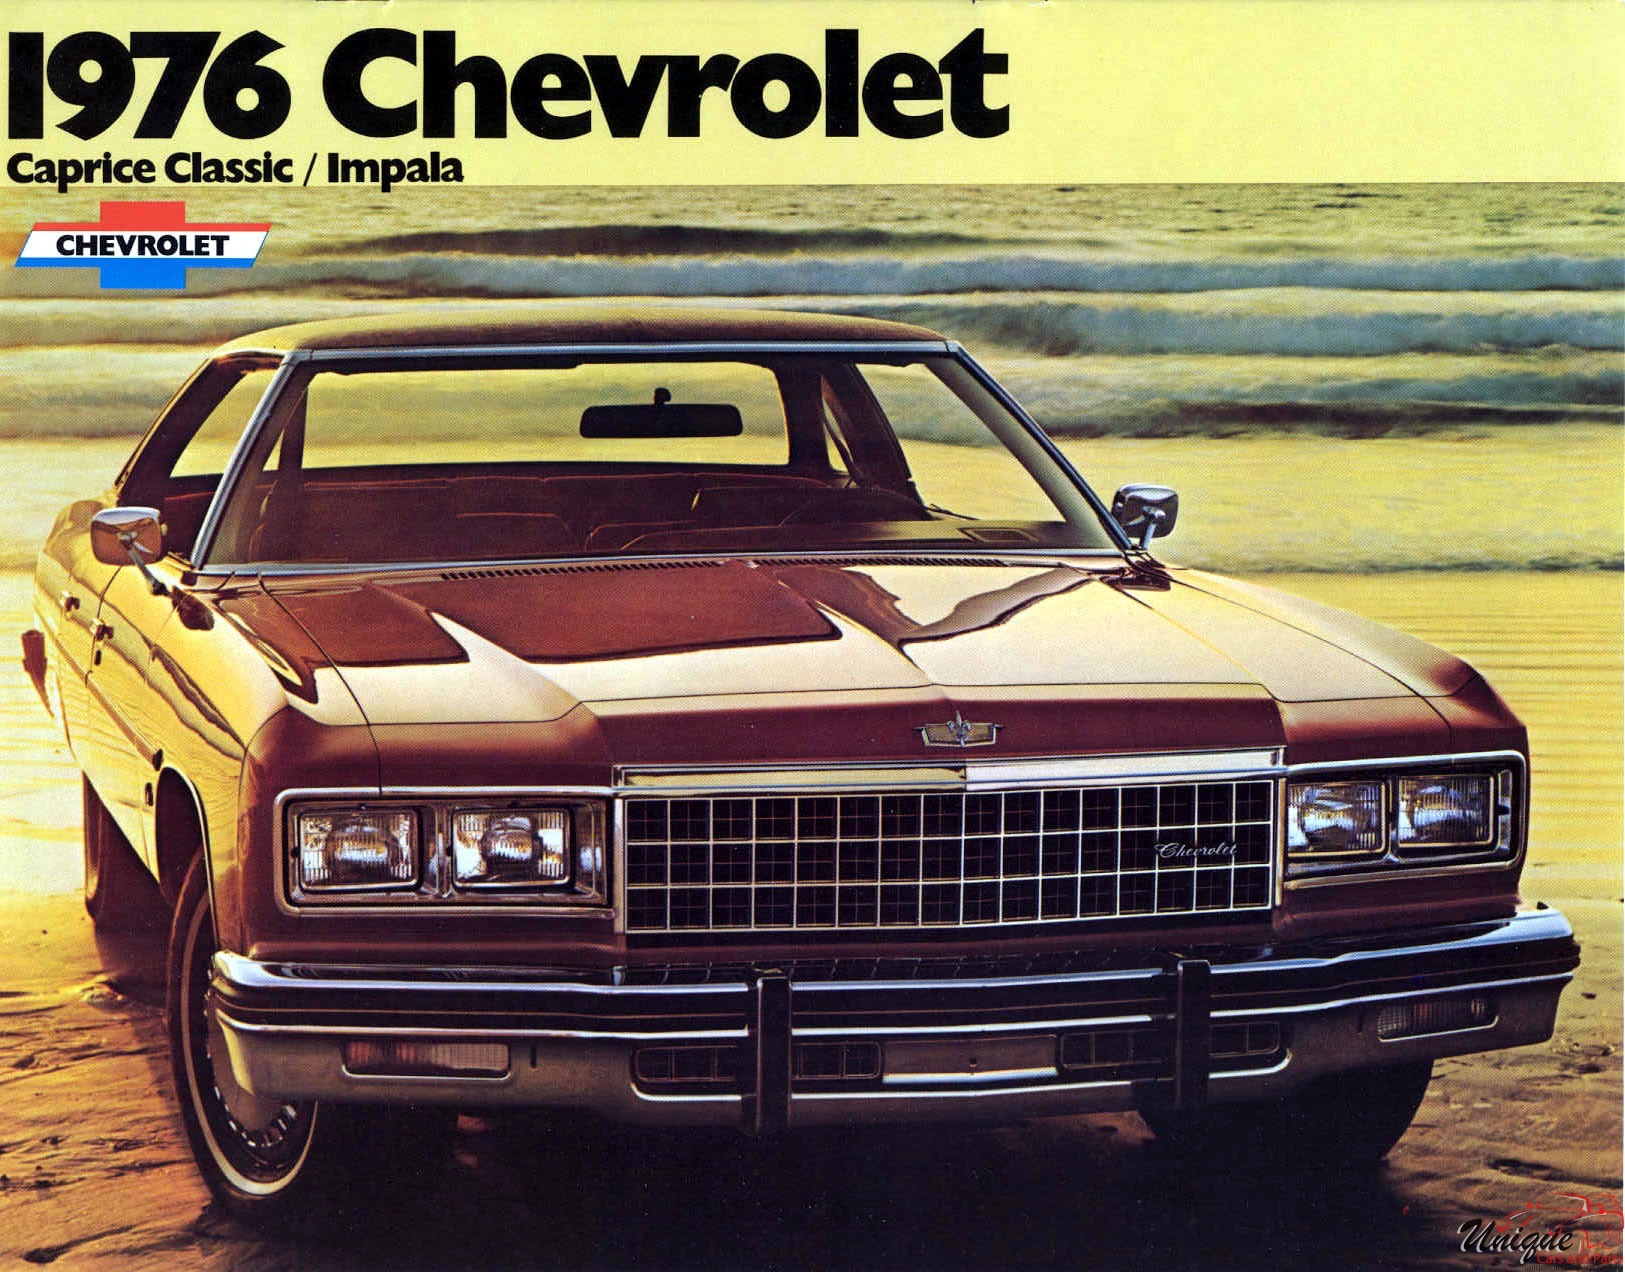 1976 Chevrolet Brochure